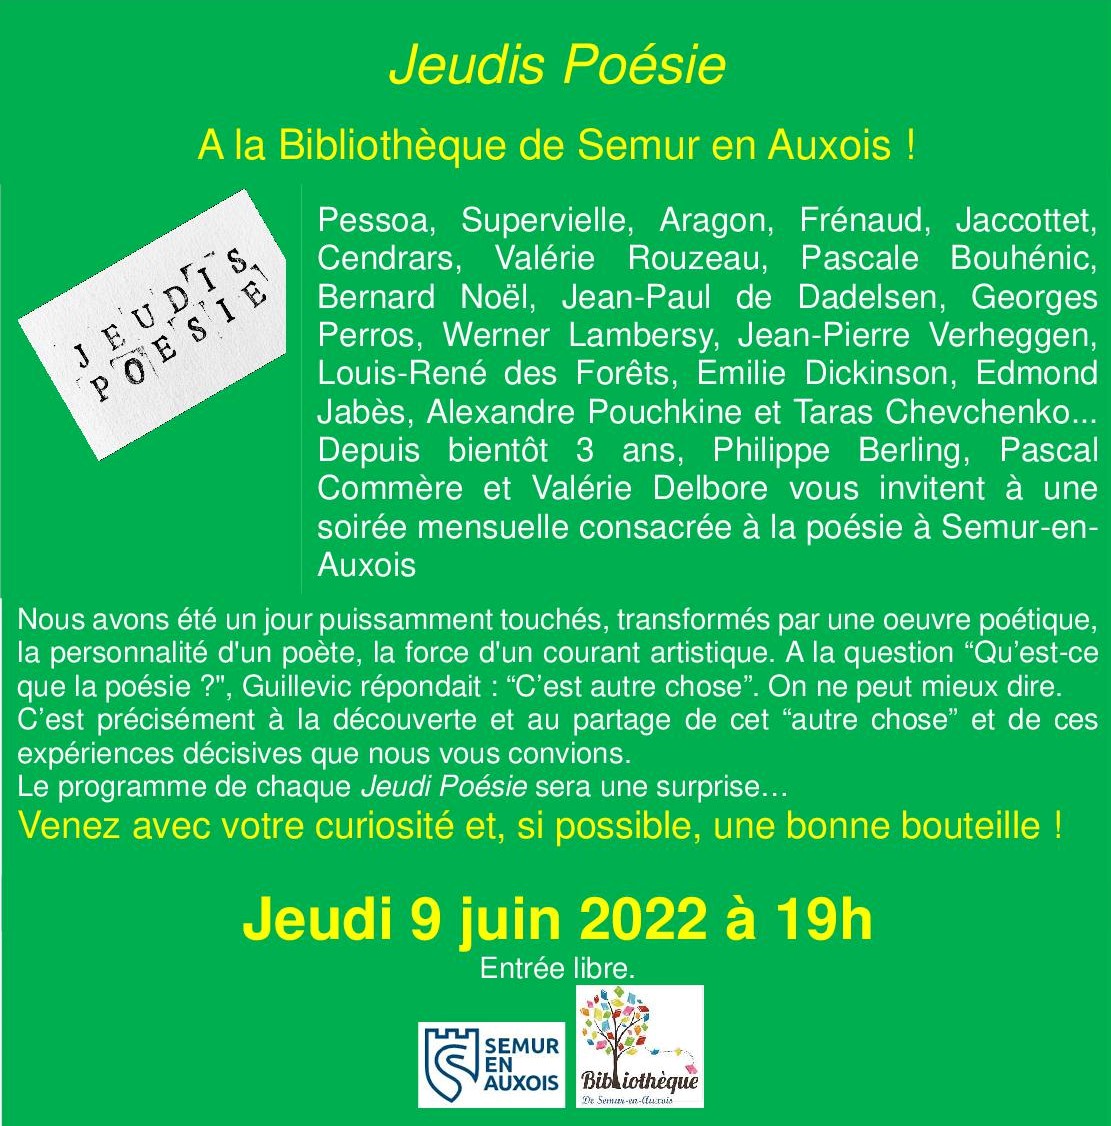 Jeudis Poésie 9 juin 2022 